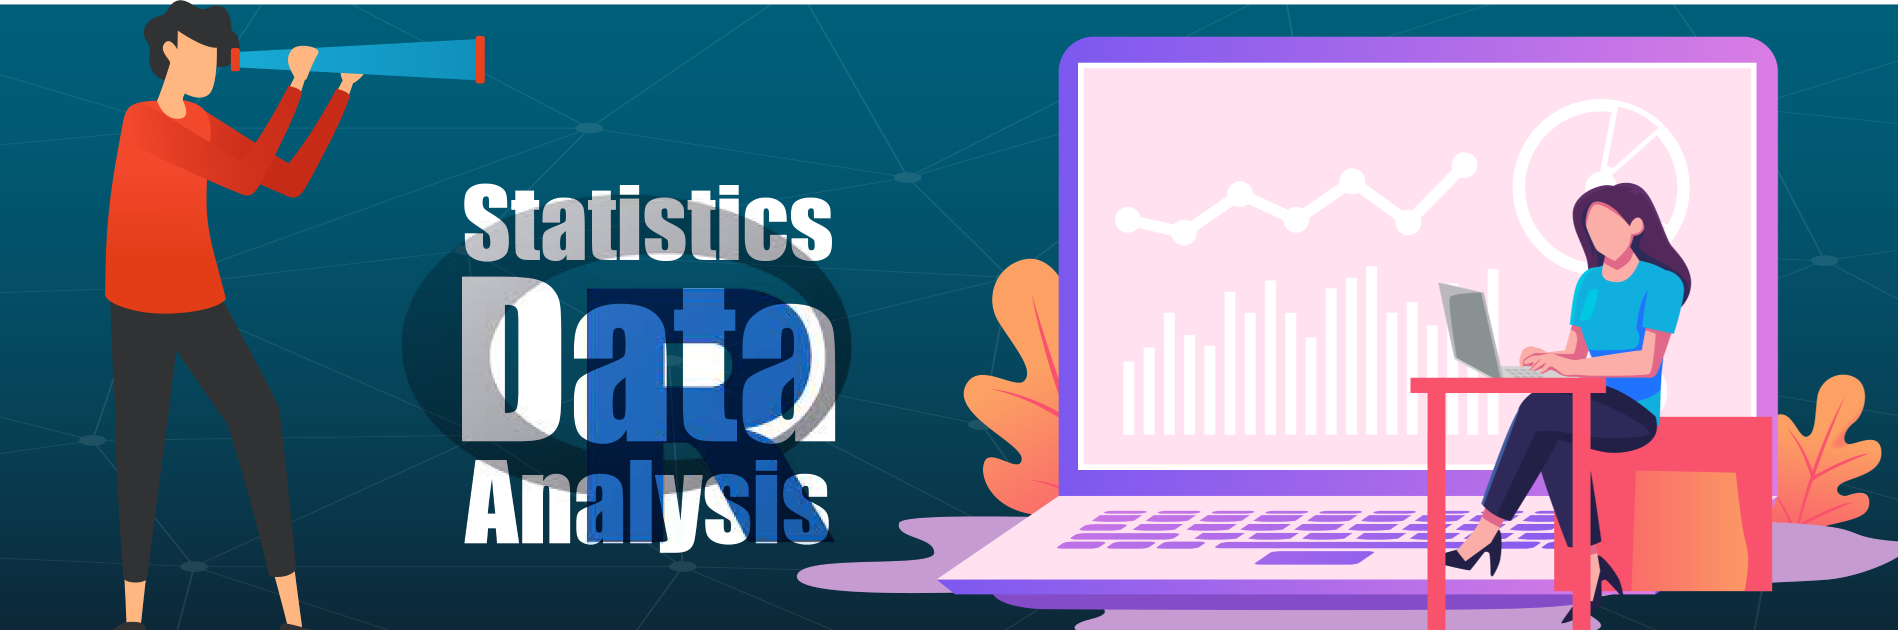 Statistics Assignment Help Blog Image 4